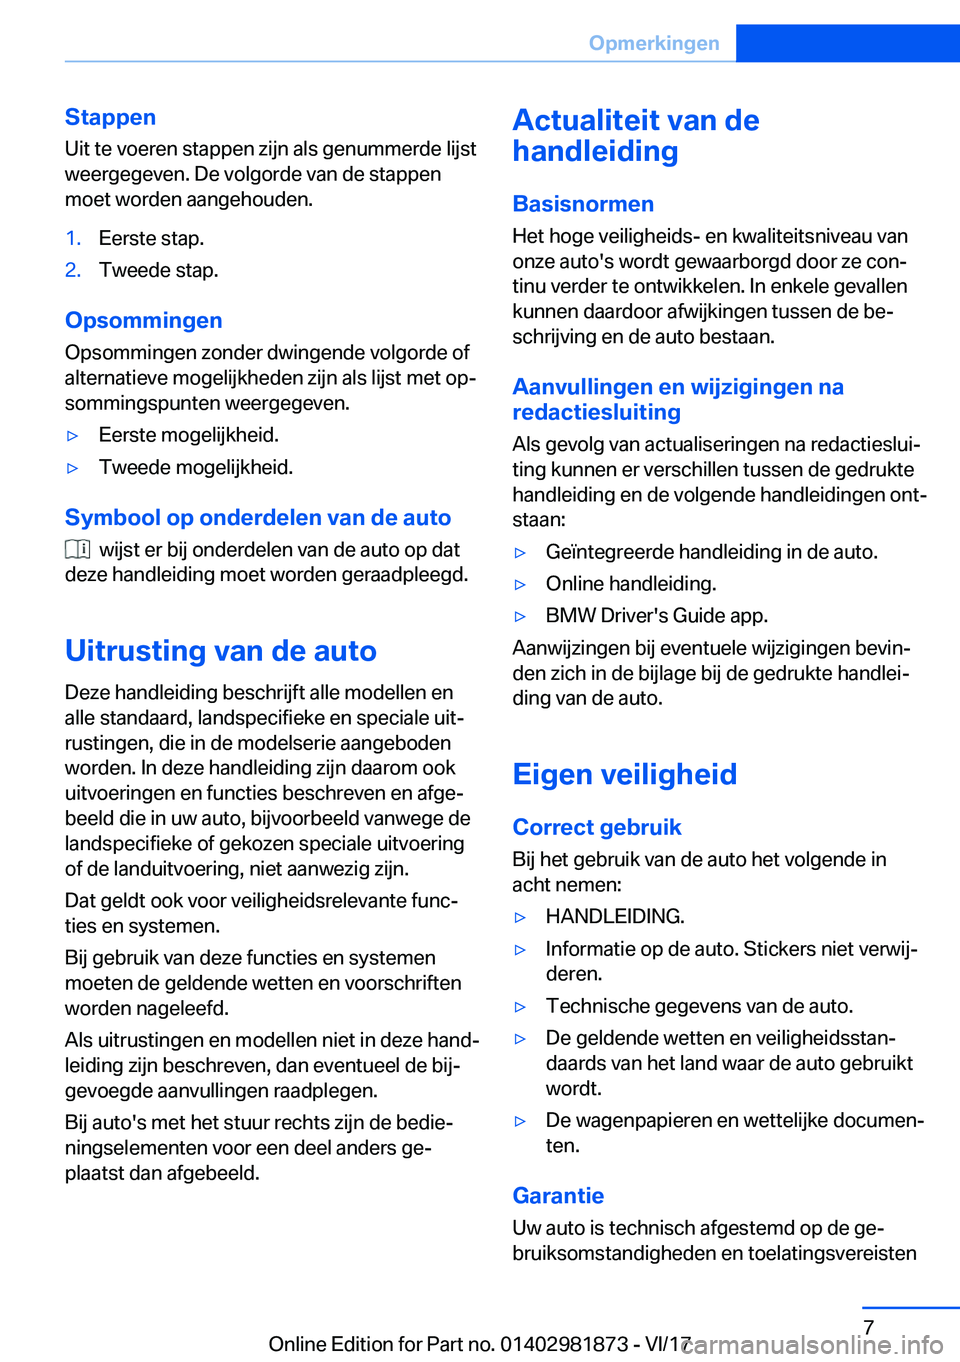 BMW 5 SERIES 2018  Instructieboekjes (in Dutch) �S�t�a�p�p�e�n
�U�i�t� �t�e� �v�o�e�r�e�n� �s�t�a�p�p�e�n� �z�i�j�n� �a�l�s� �g�e�n�u�m�m�e�r�d�e� �l�i�j�s�t �w�e�e�r�g�e�g�e�v�e�n�.� �D�e� �v�o�l�g�o�r�d�e� �v�a�n� �d�e� �s�t�a�p�p�e�n�m�o�e�t� �w